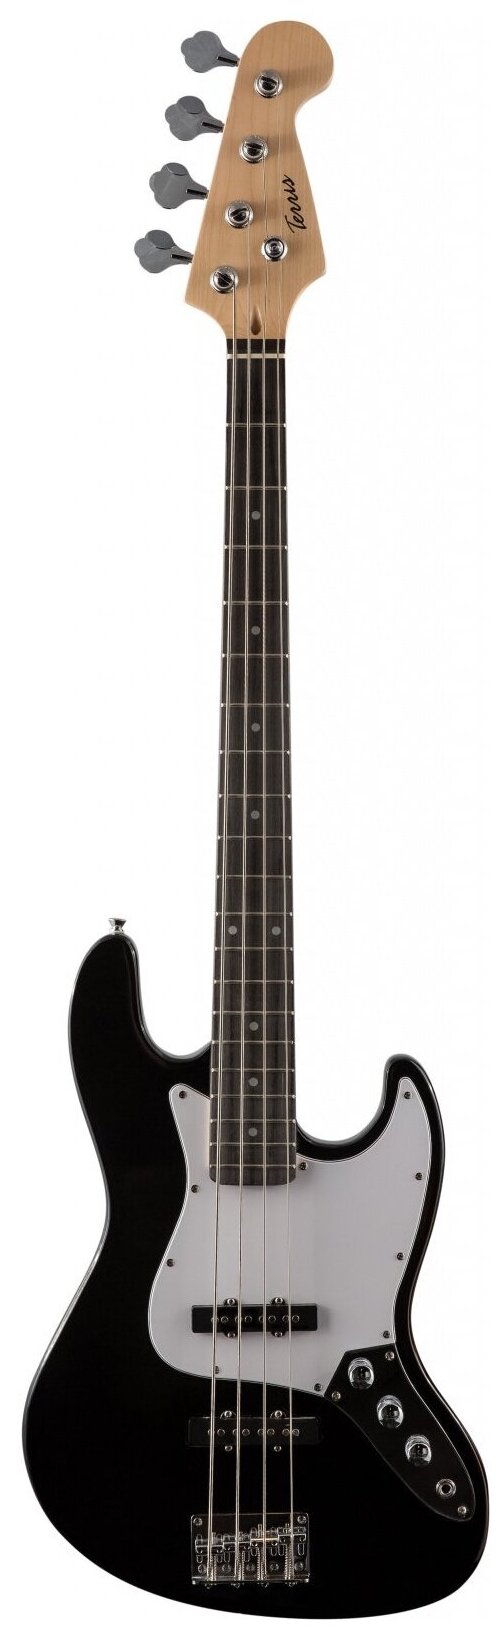 TERRIS TJB-46 BK бас-гитара jazz bass,цвет черный